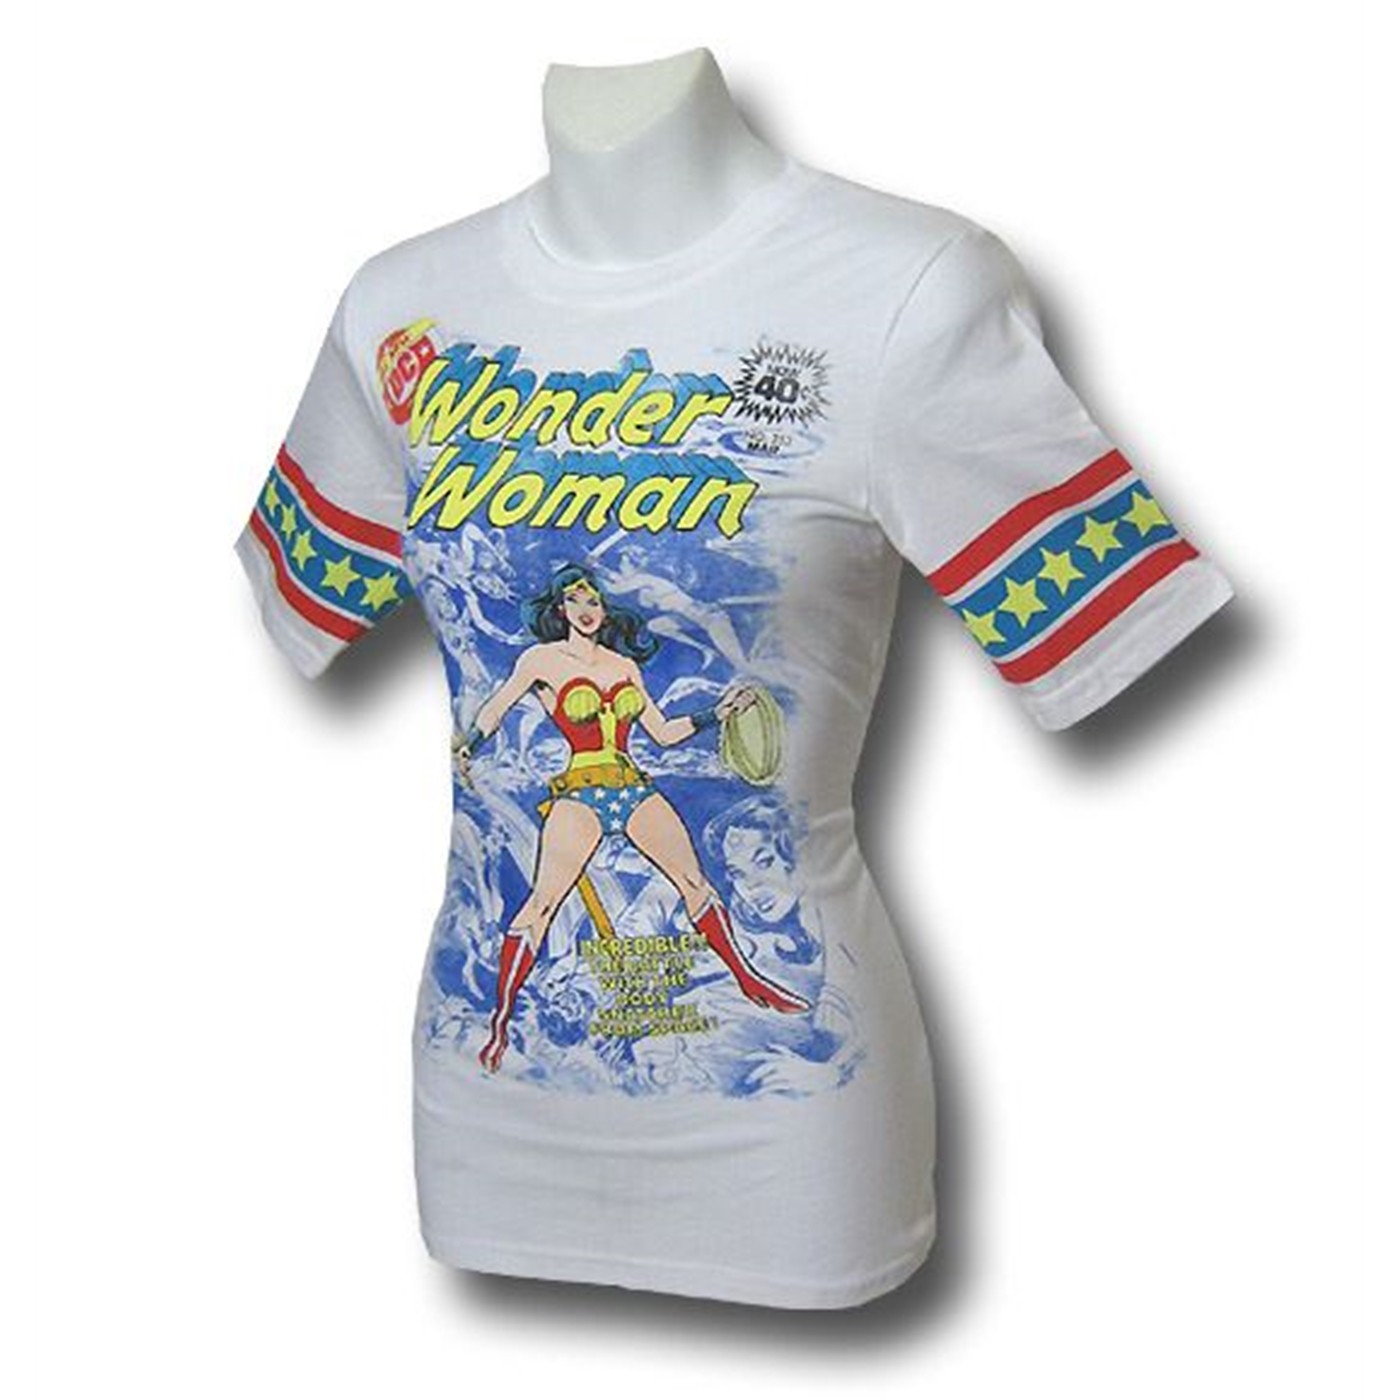 Wonder Woman Jr Womens Battle Athletic T-Shirt